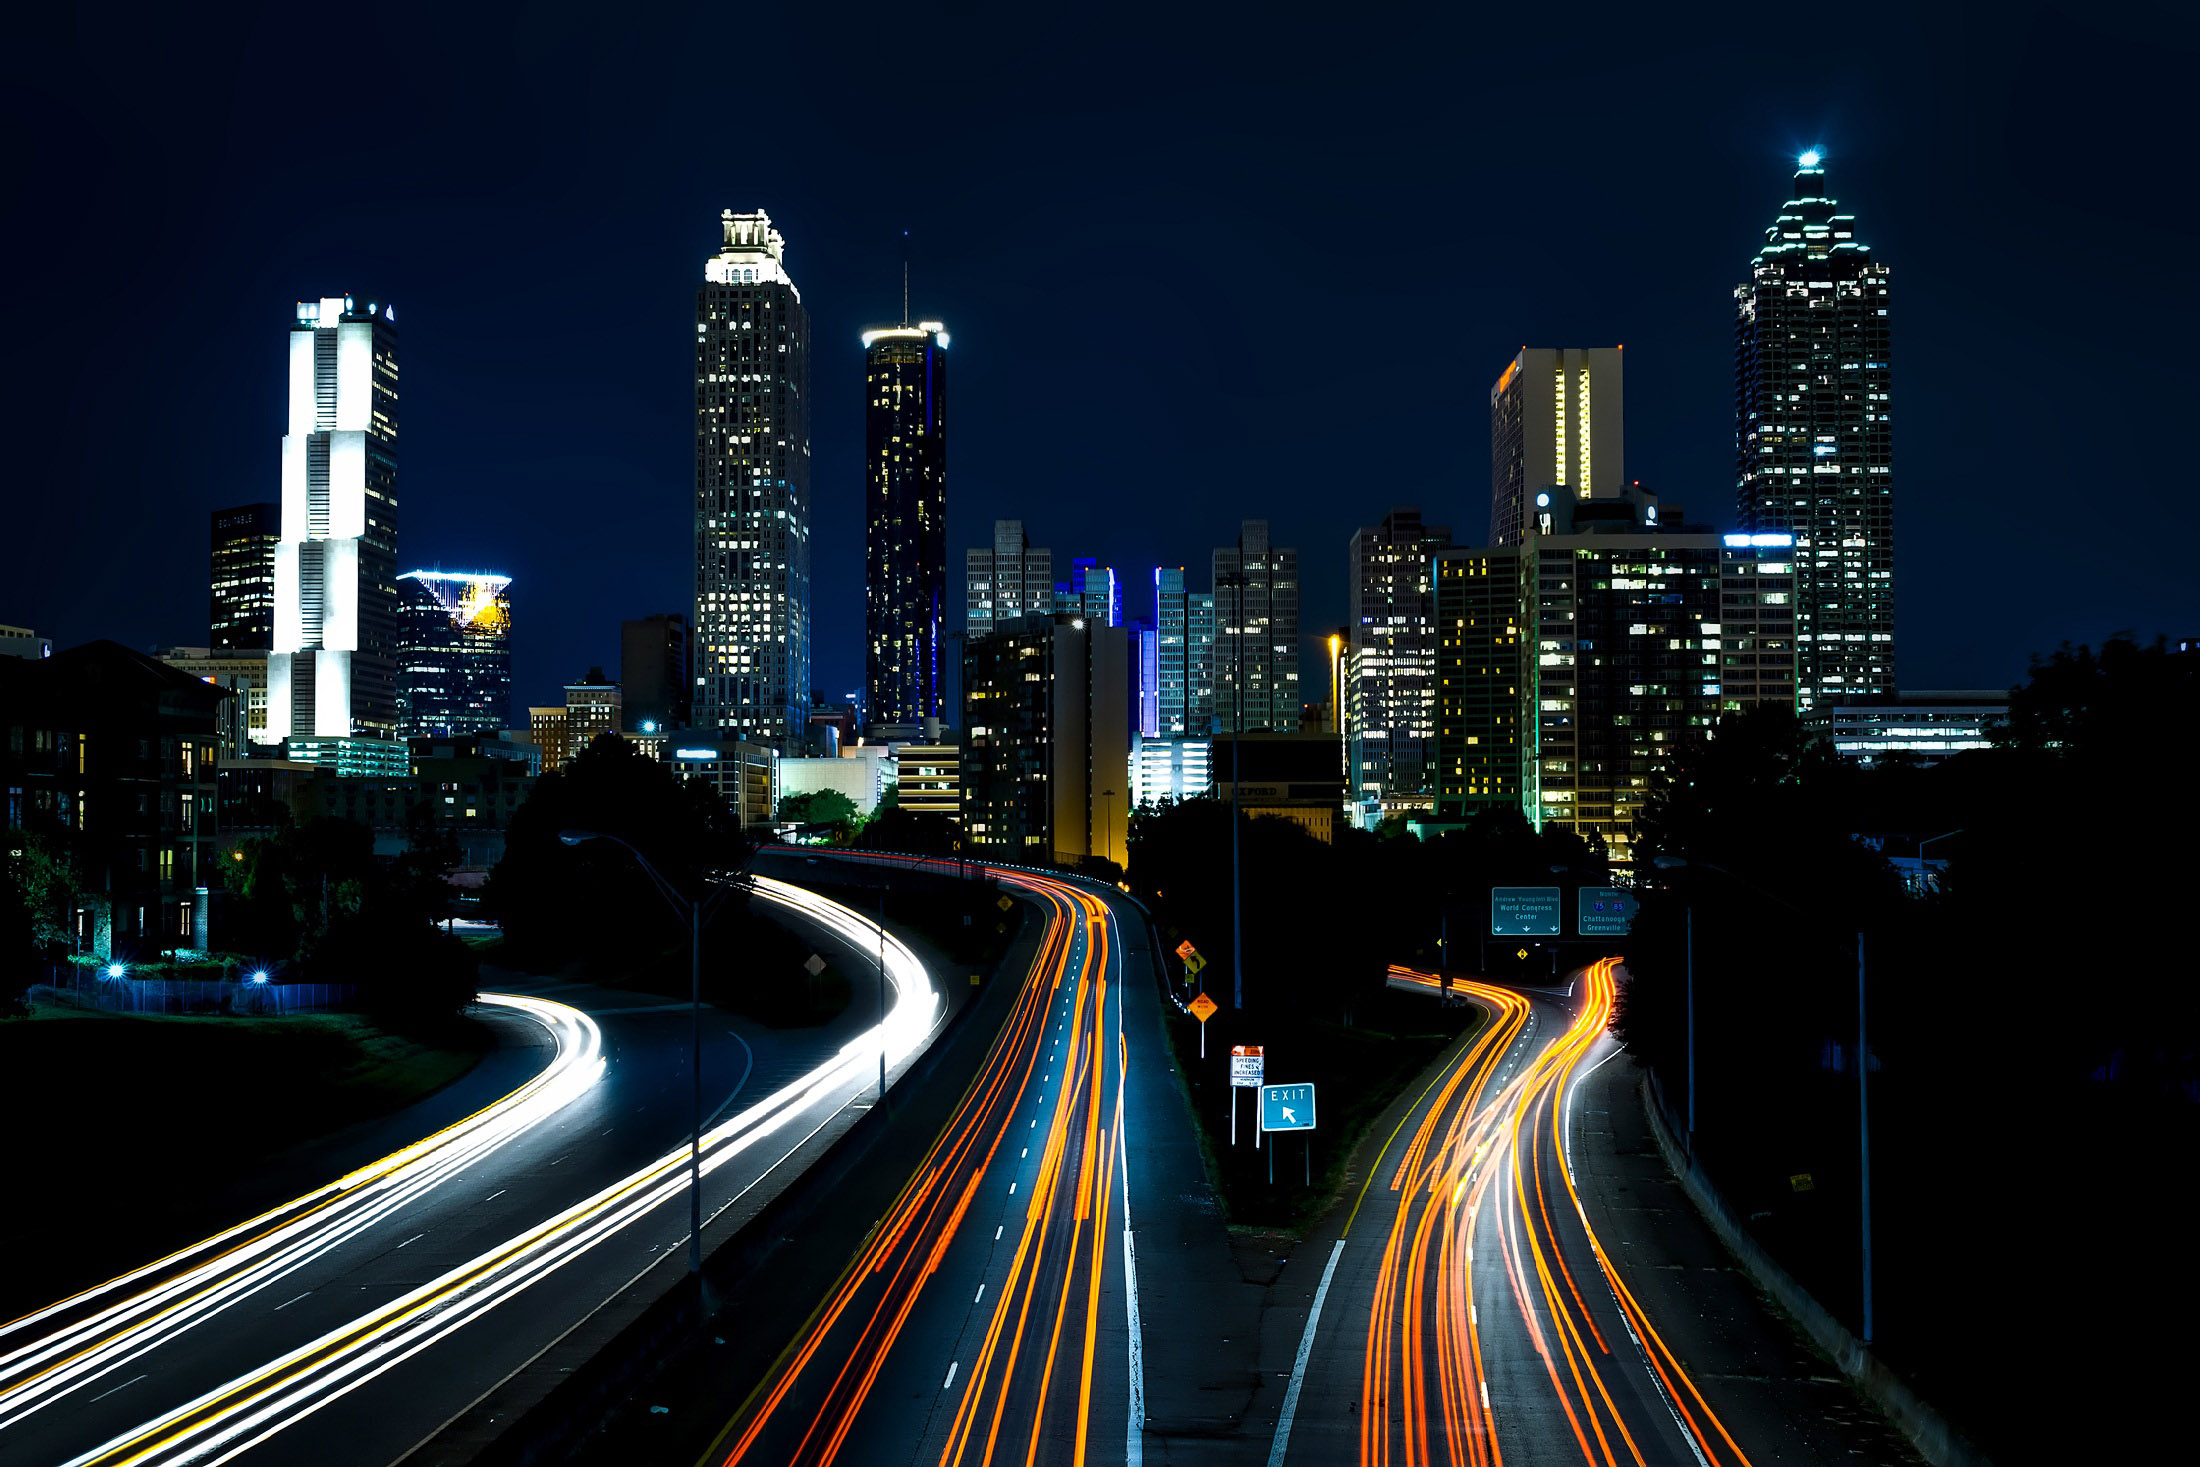 Skyline With Lights And Roads In Atlanta Georgia Image